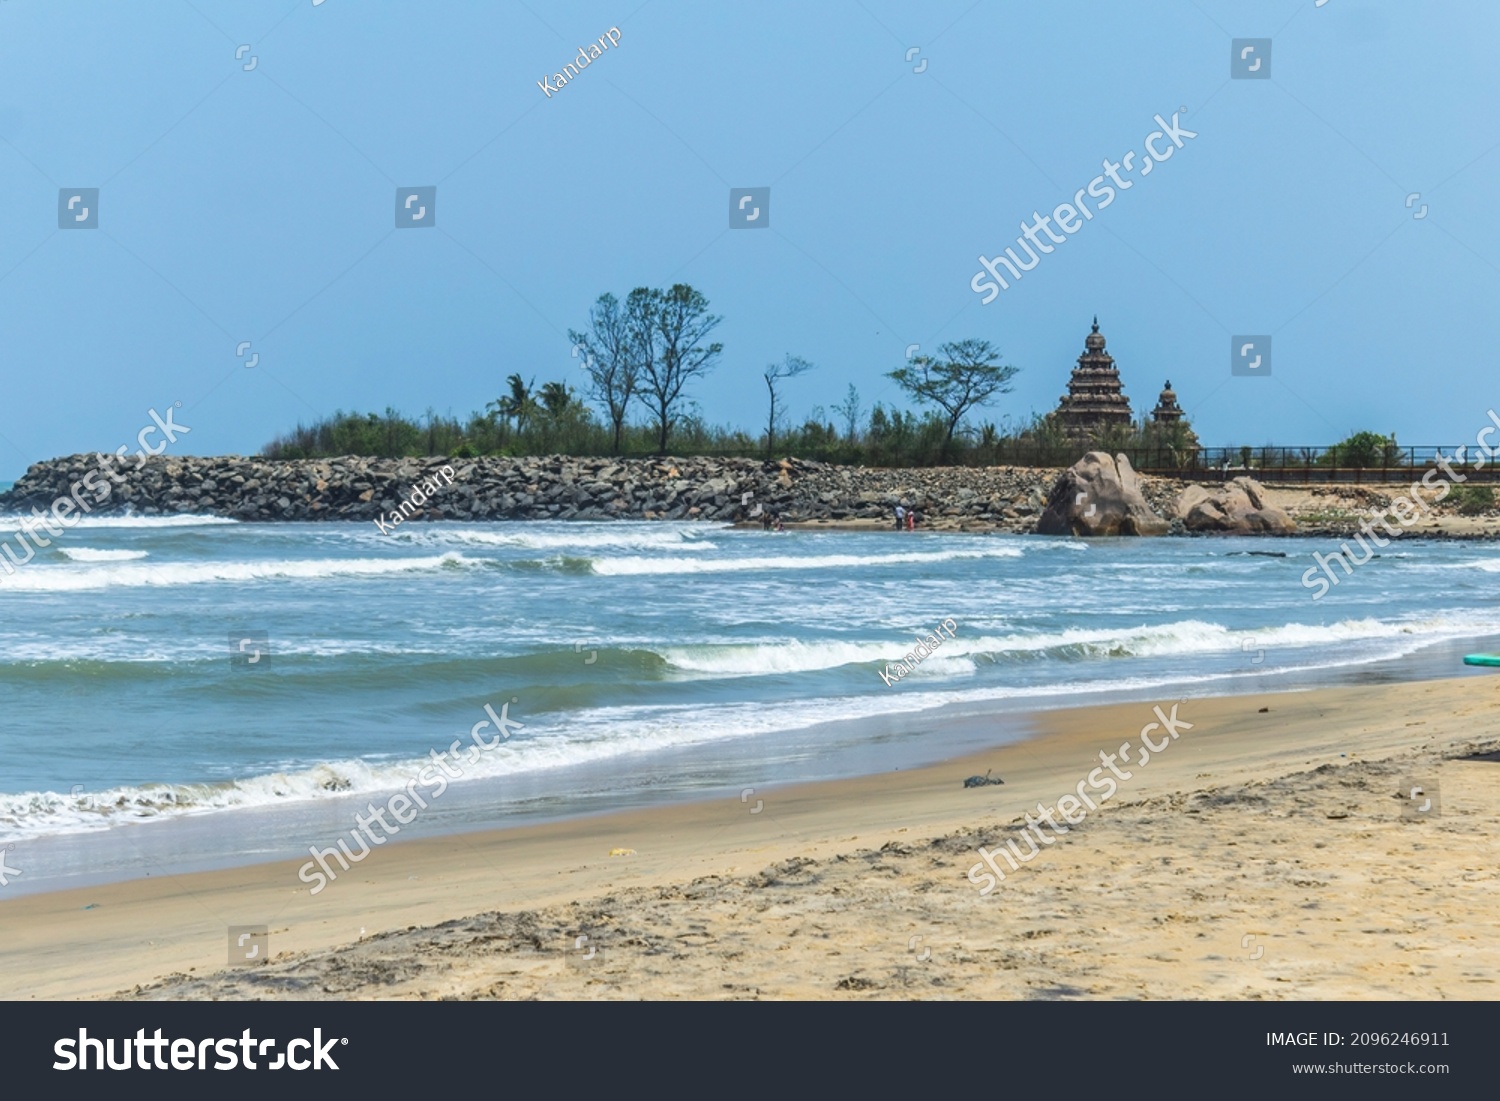 Mahabalipuram beach Images, Stock Photos & Vectors Shutterstock